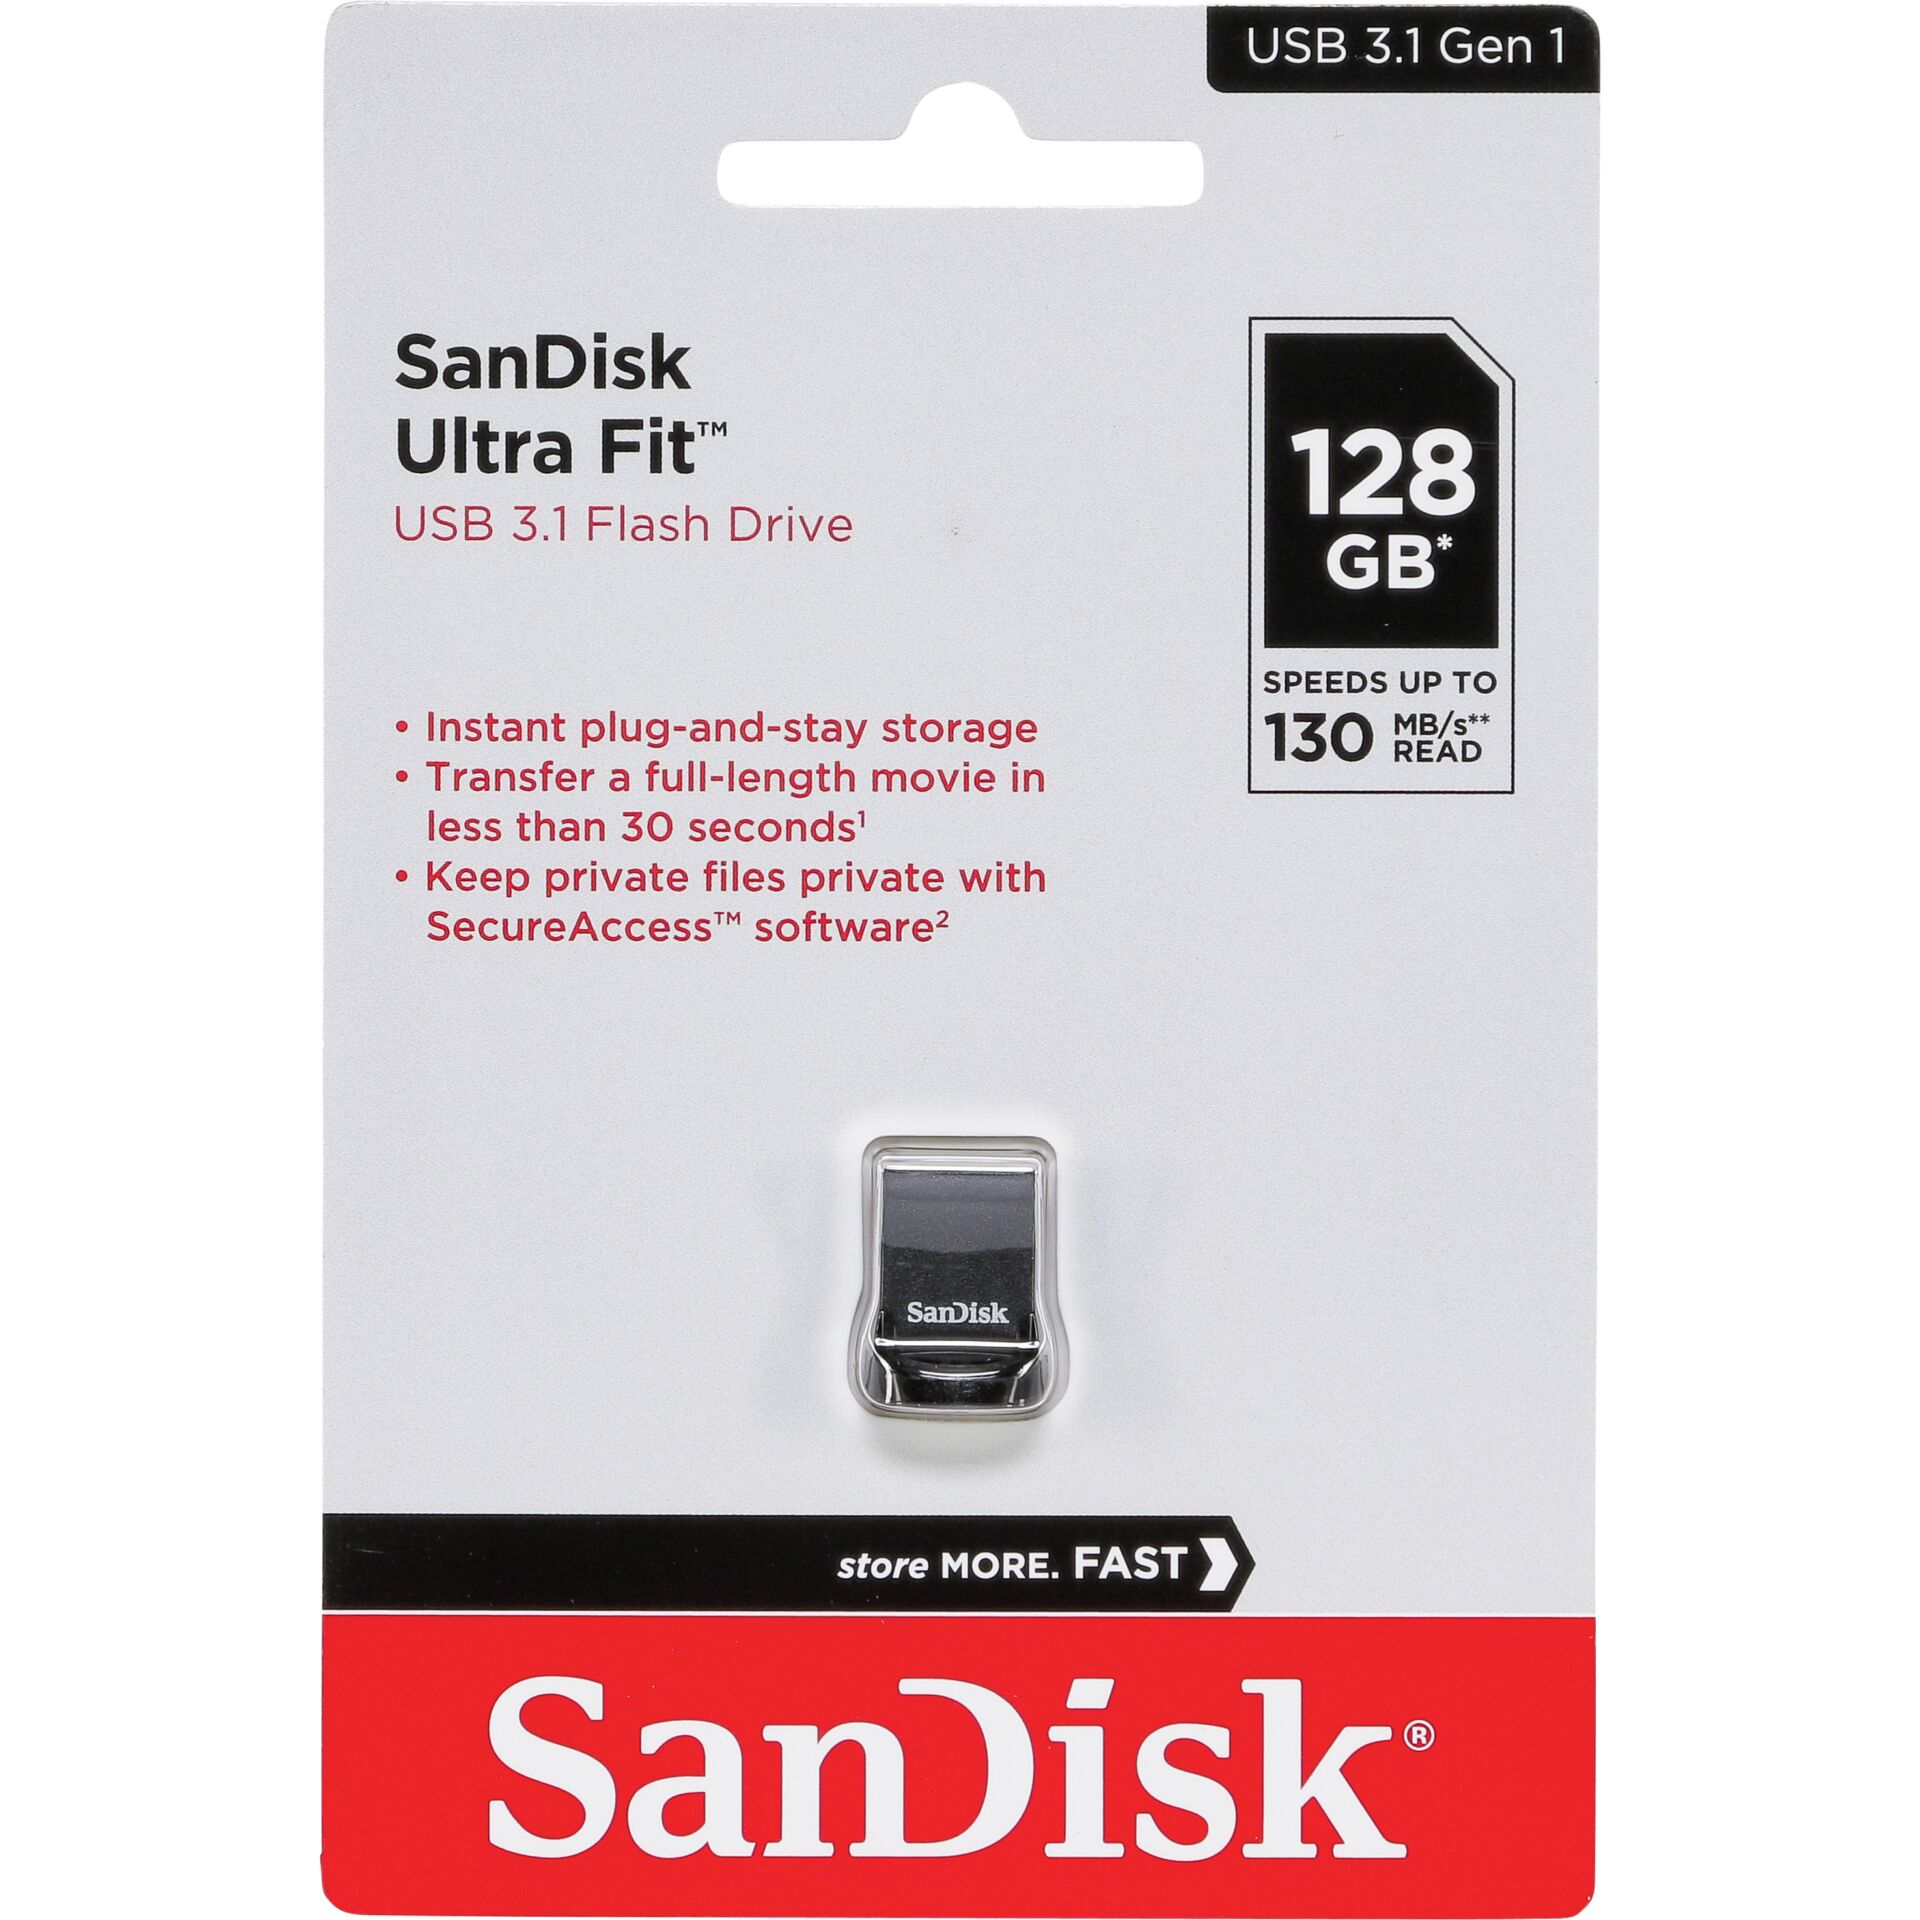 128 GB SanDisk Ultra Fit USB 3.1 (Gen 1) Stick lesen: 130MB/s